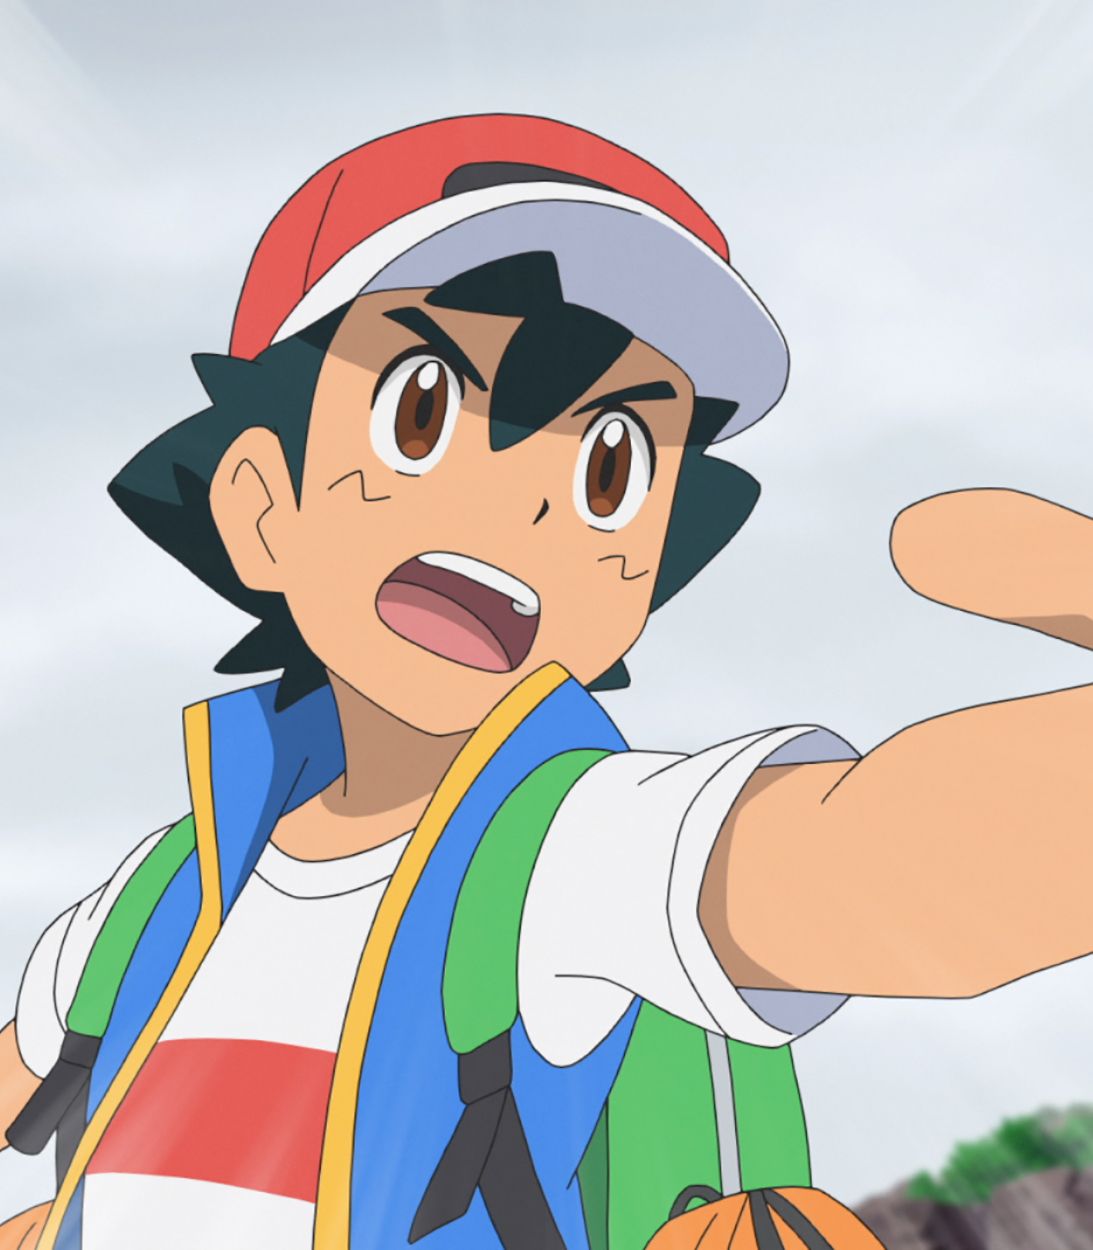 Ash Ketchum in Pokémon Master Journeys: The Series.